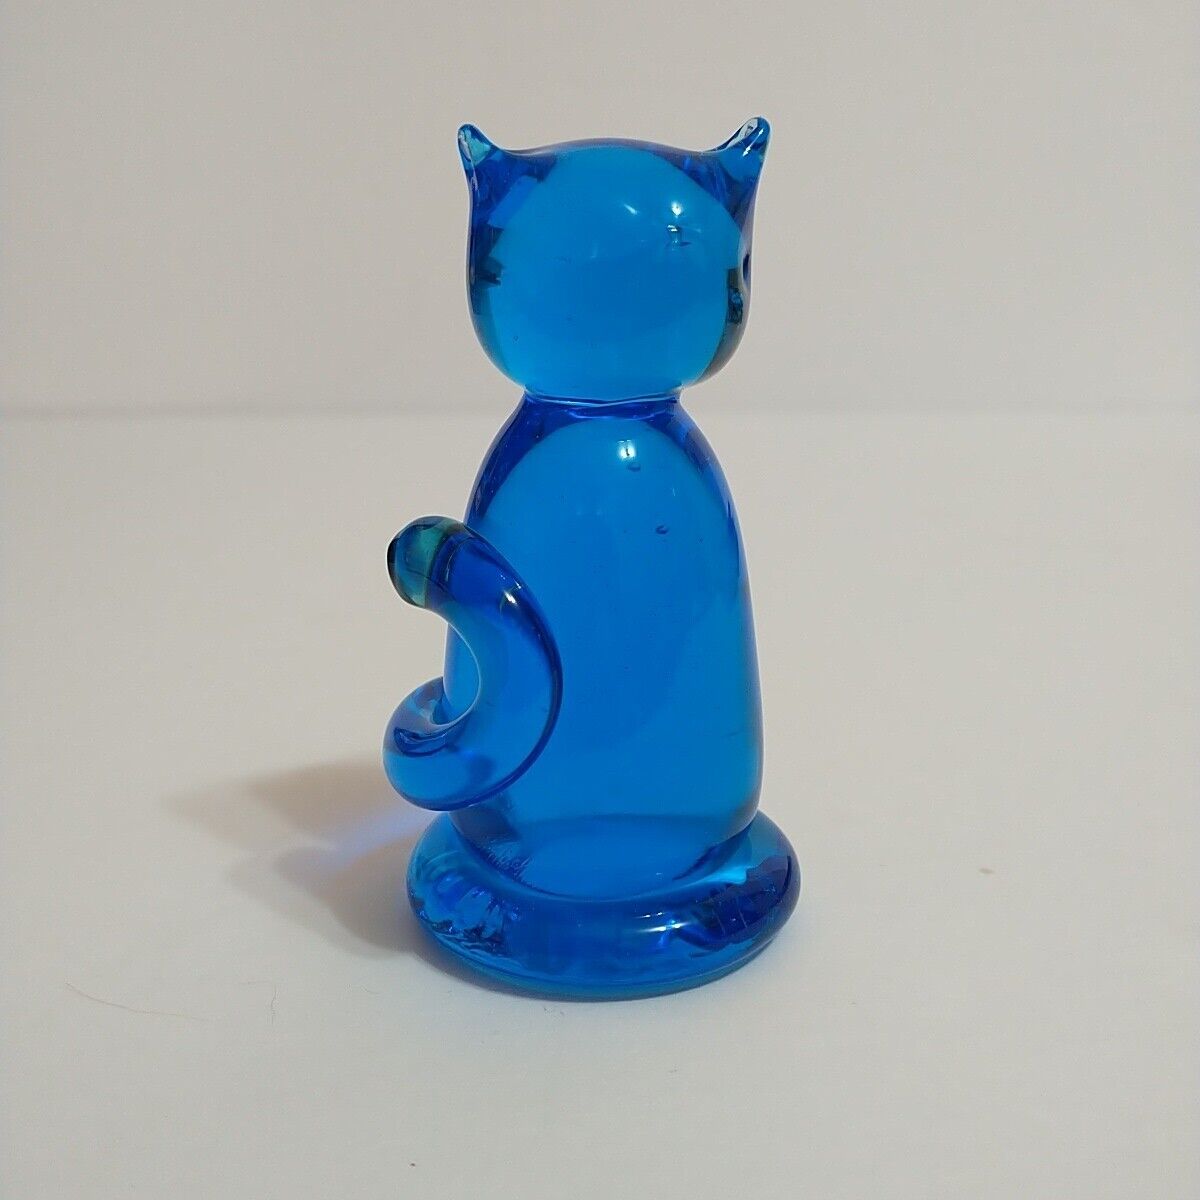 Vintage Terra Studios Blue CAT Art Glass Figurine Handmade in USA HTF Rare Piece